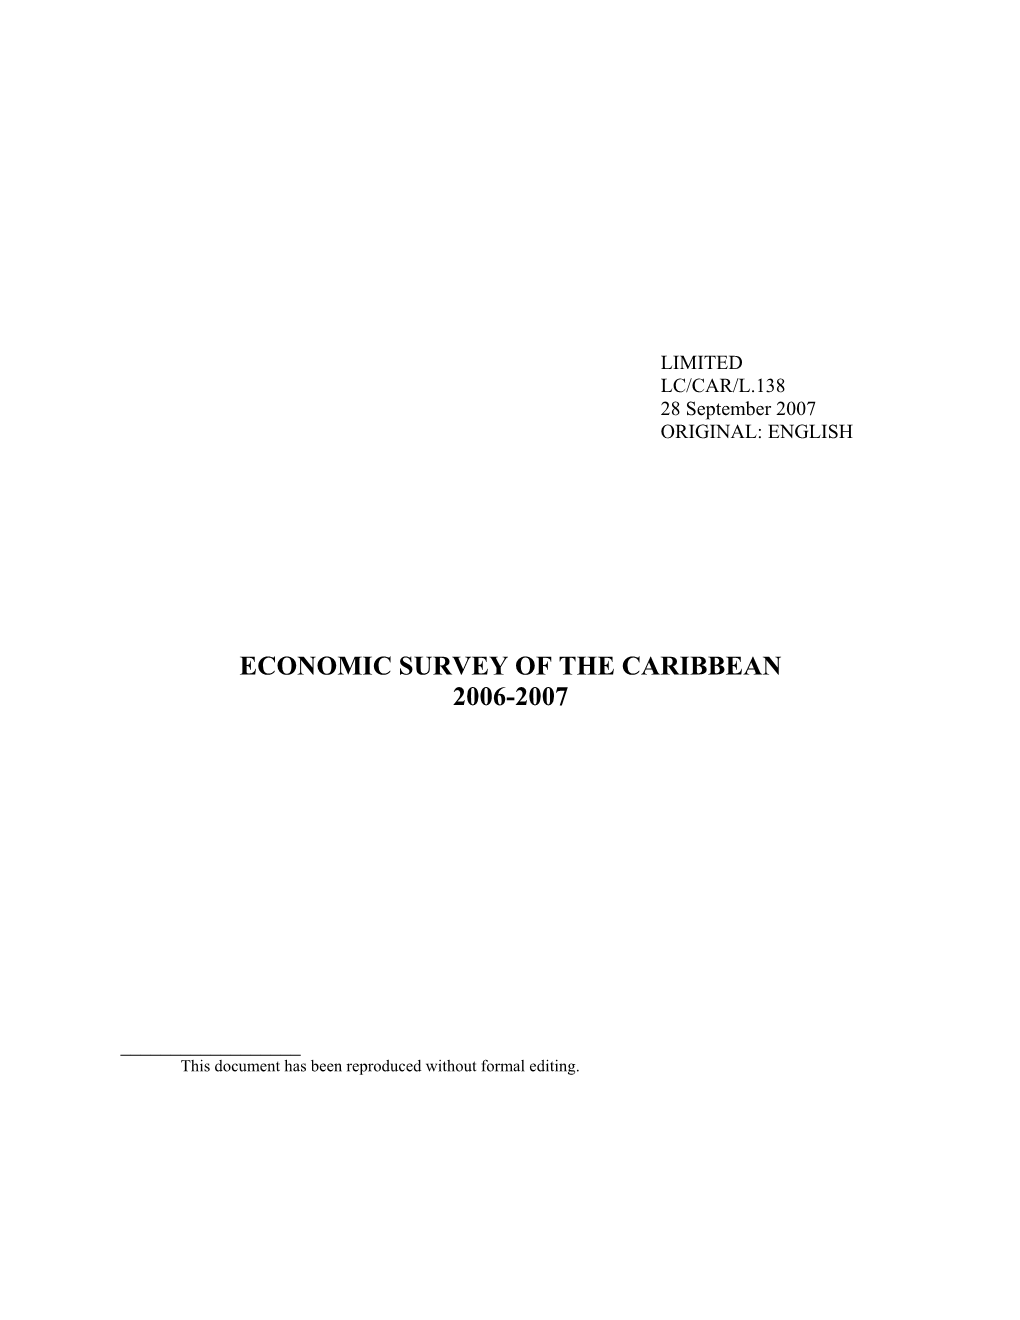 Economic Survey of the Caribbean 2006-2007